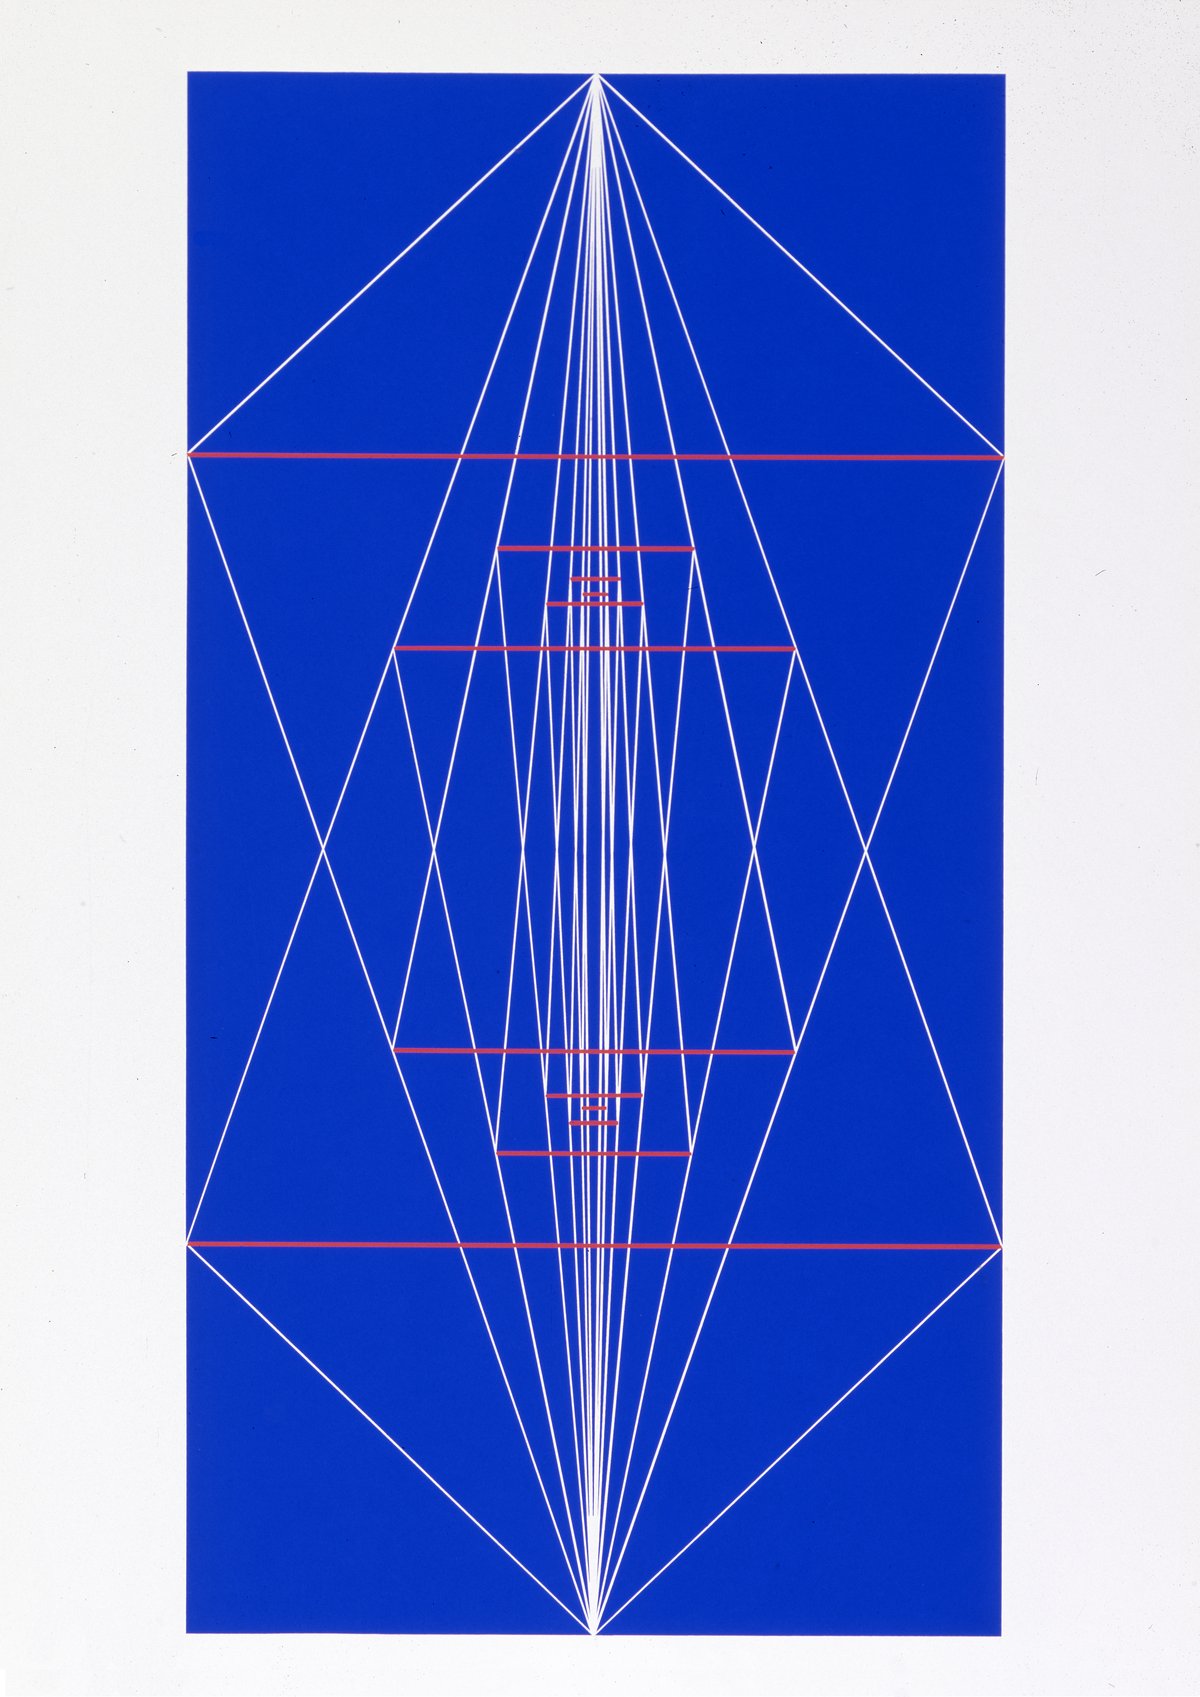 vladimir akulinin, &quot;die spannung&quot; (1964), silkscreen on laid paper, 84 x 60 cm